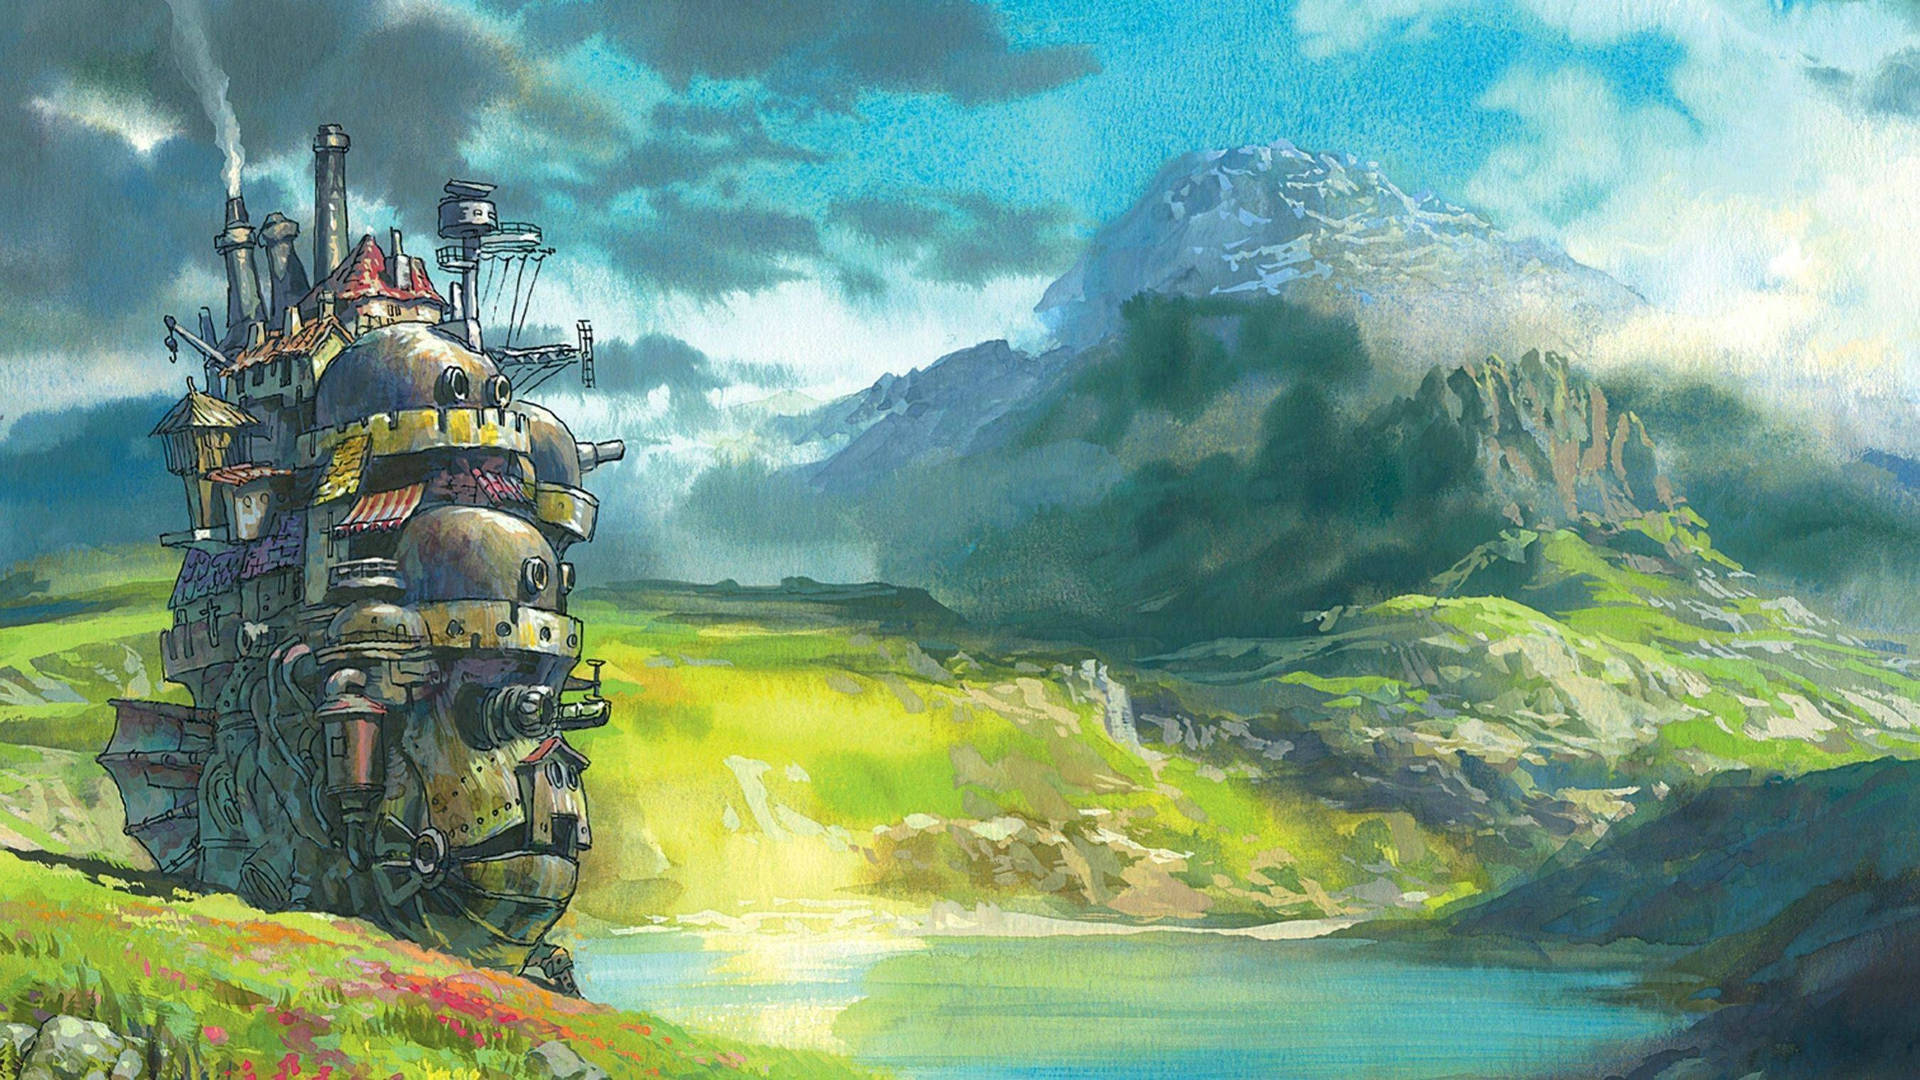 Studio Ghibli Howl's Moving Castle Wallpaper